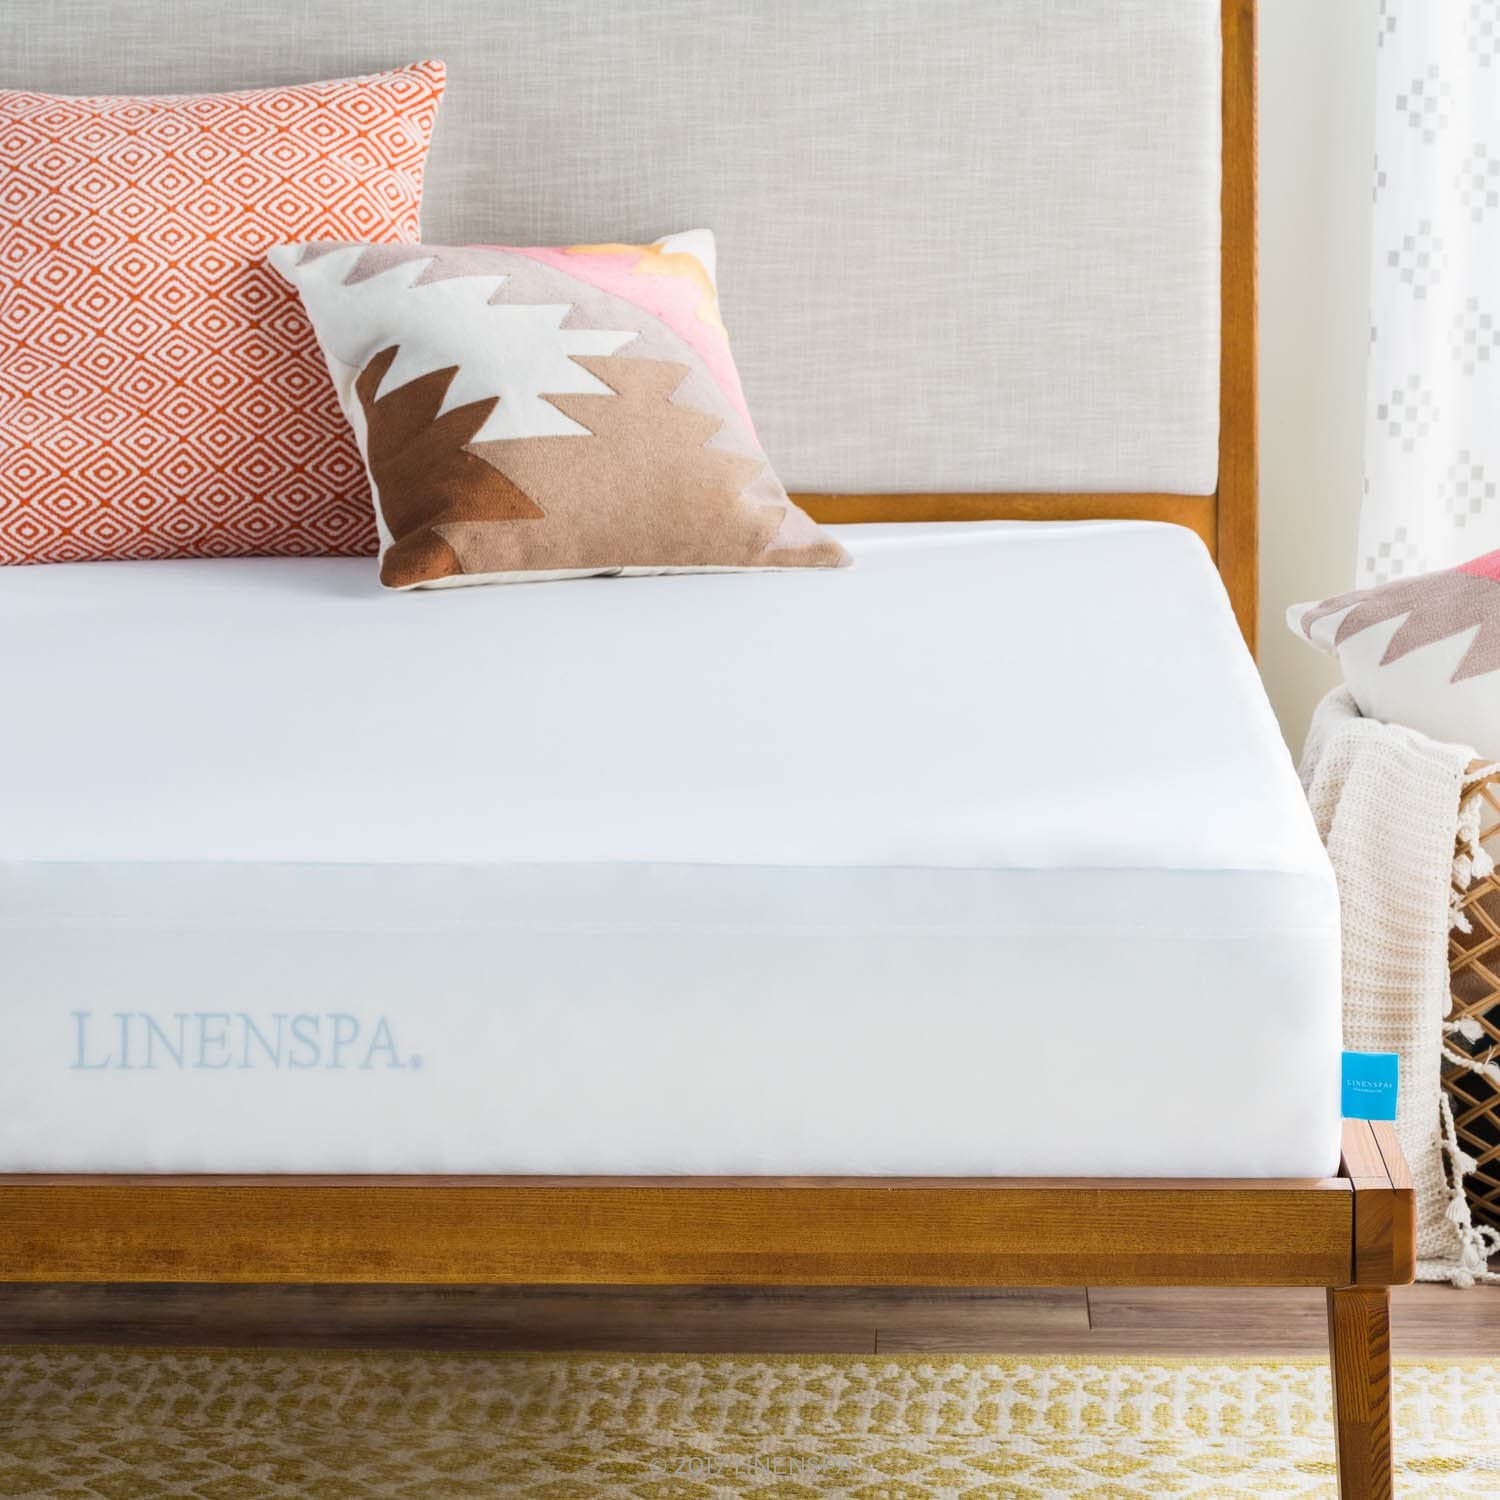 Linenspa Bedding Premium Smooth Fabric Mattress Protector